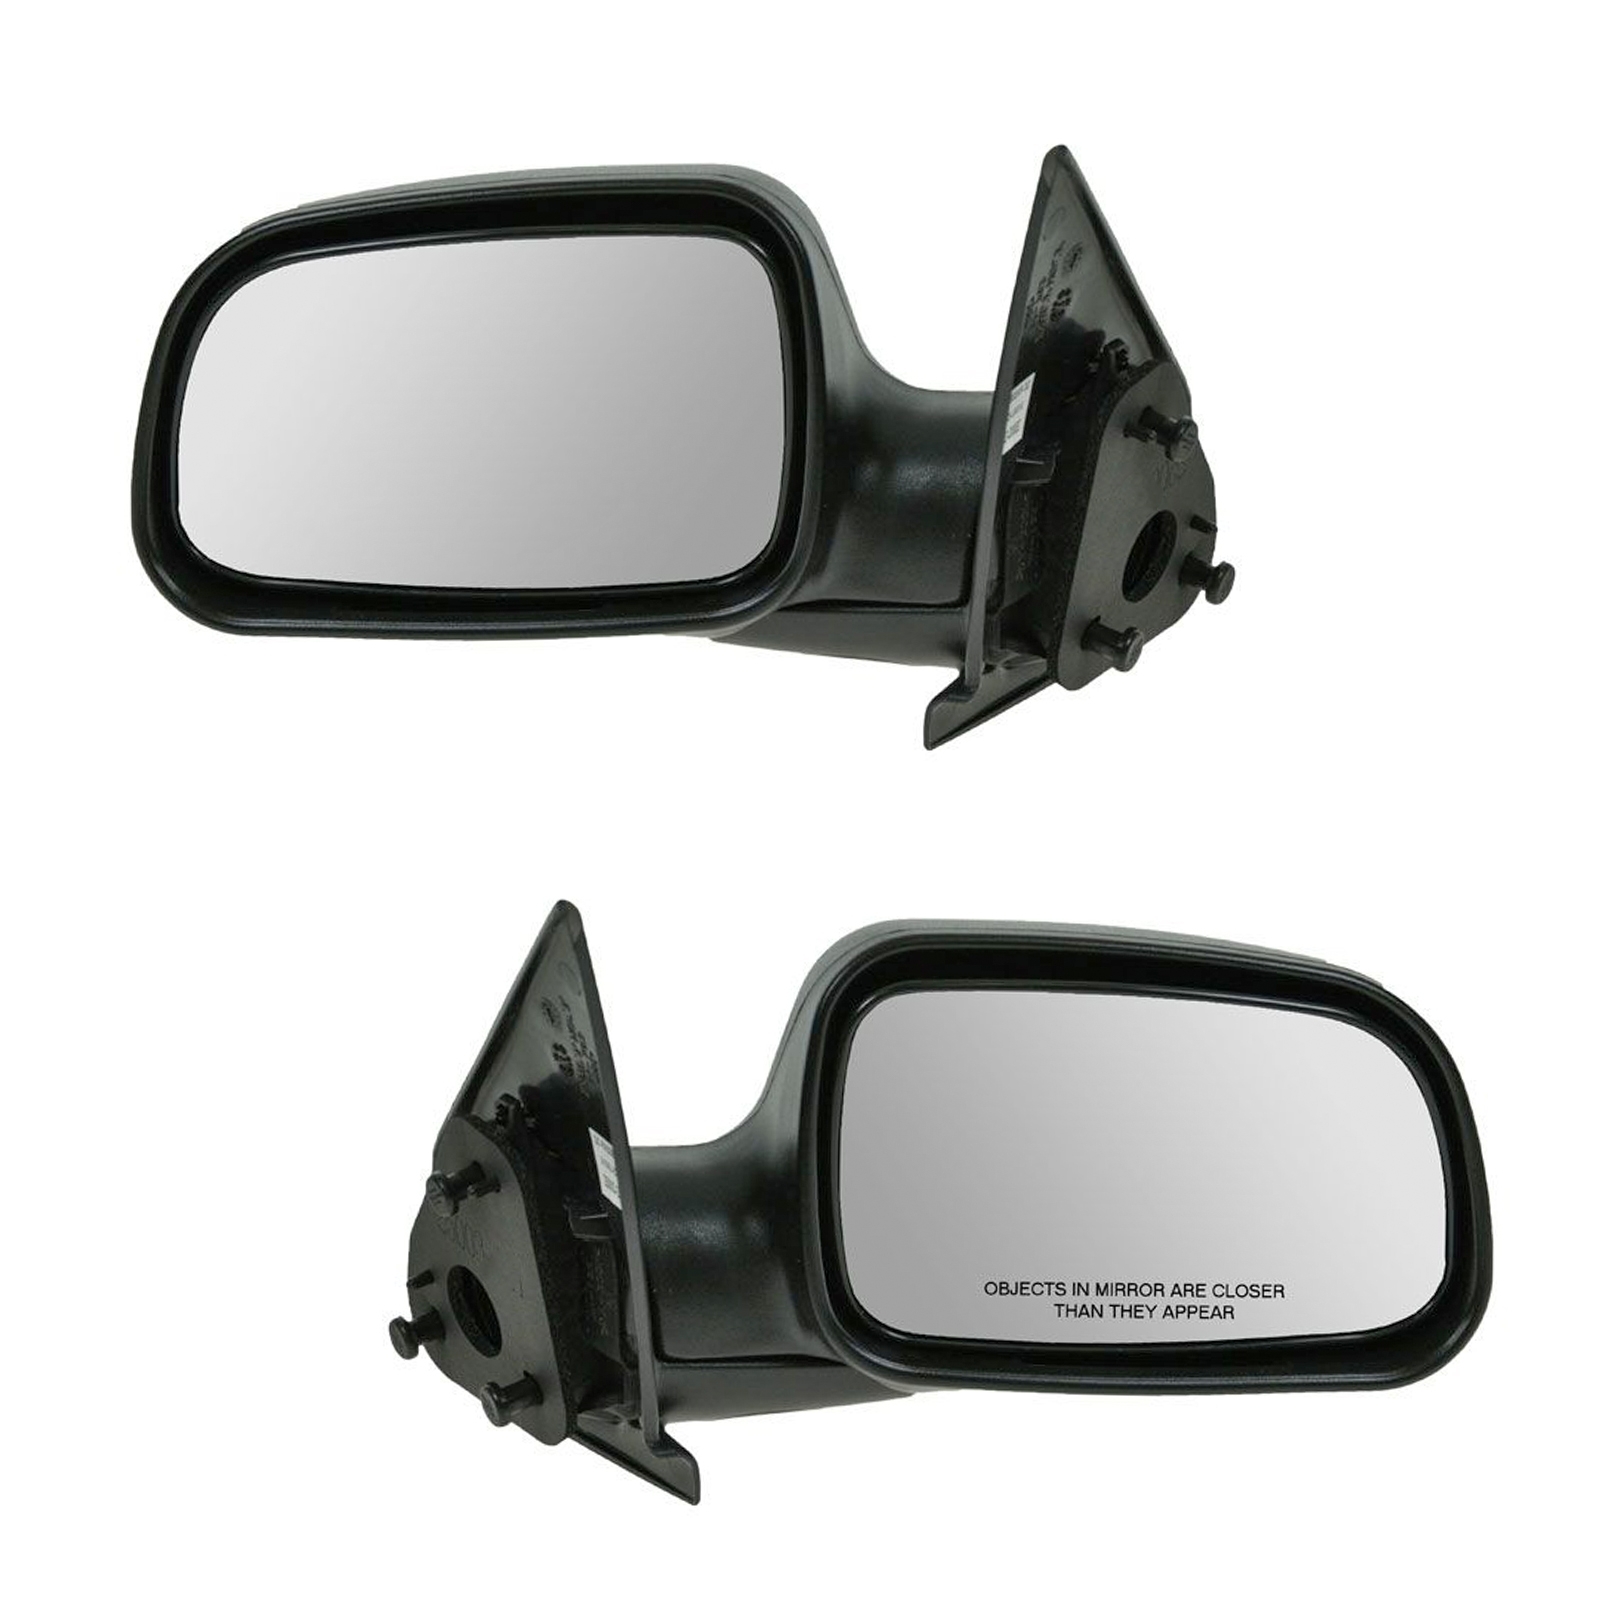 Trq Manual Manual-Folding Textured Black 2 Piece Mirror Set For 99-04 Grand Cherokee Driver &